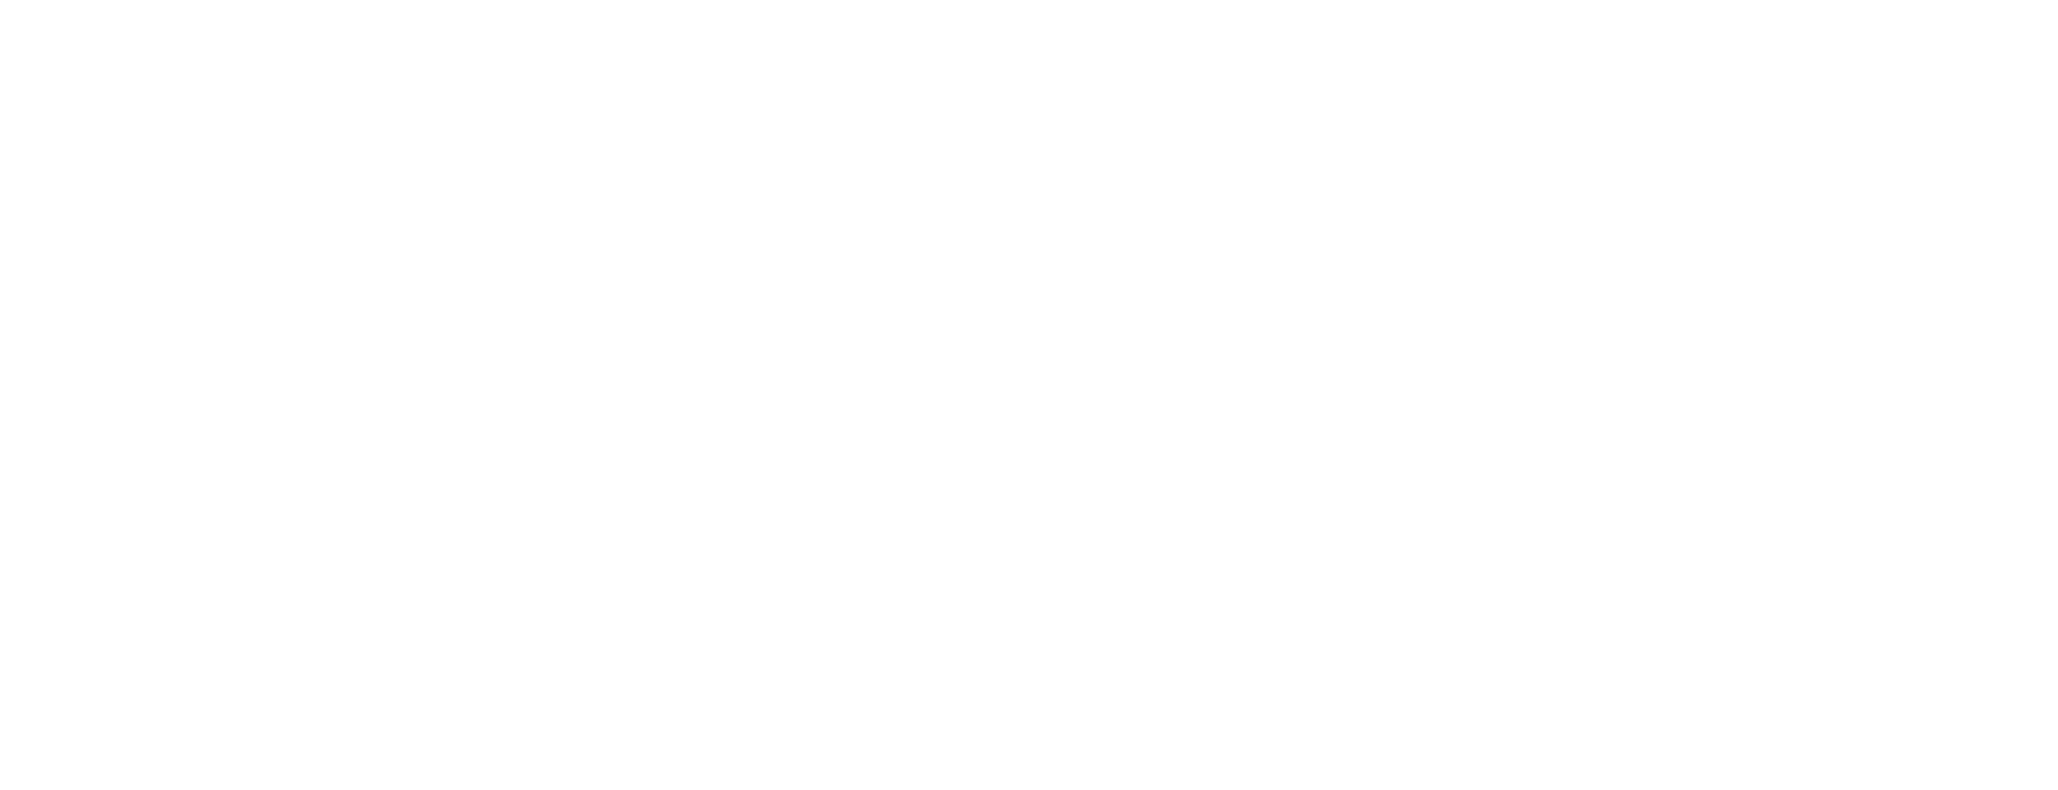 Nordsjø Premium hvit logo